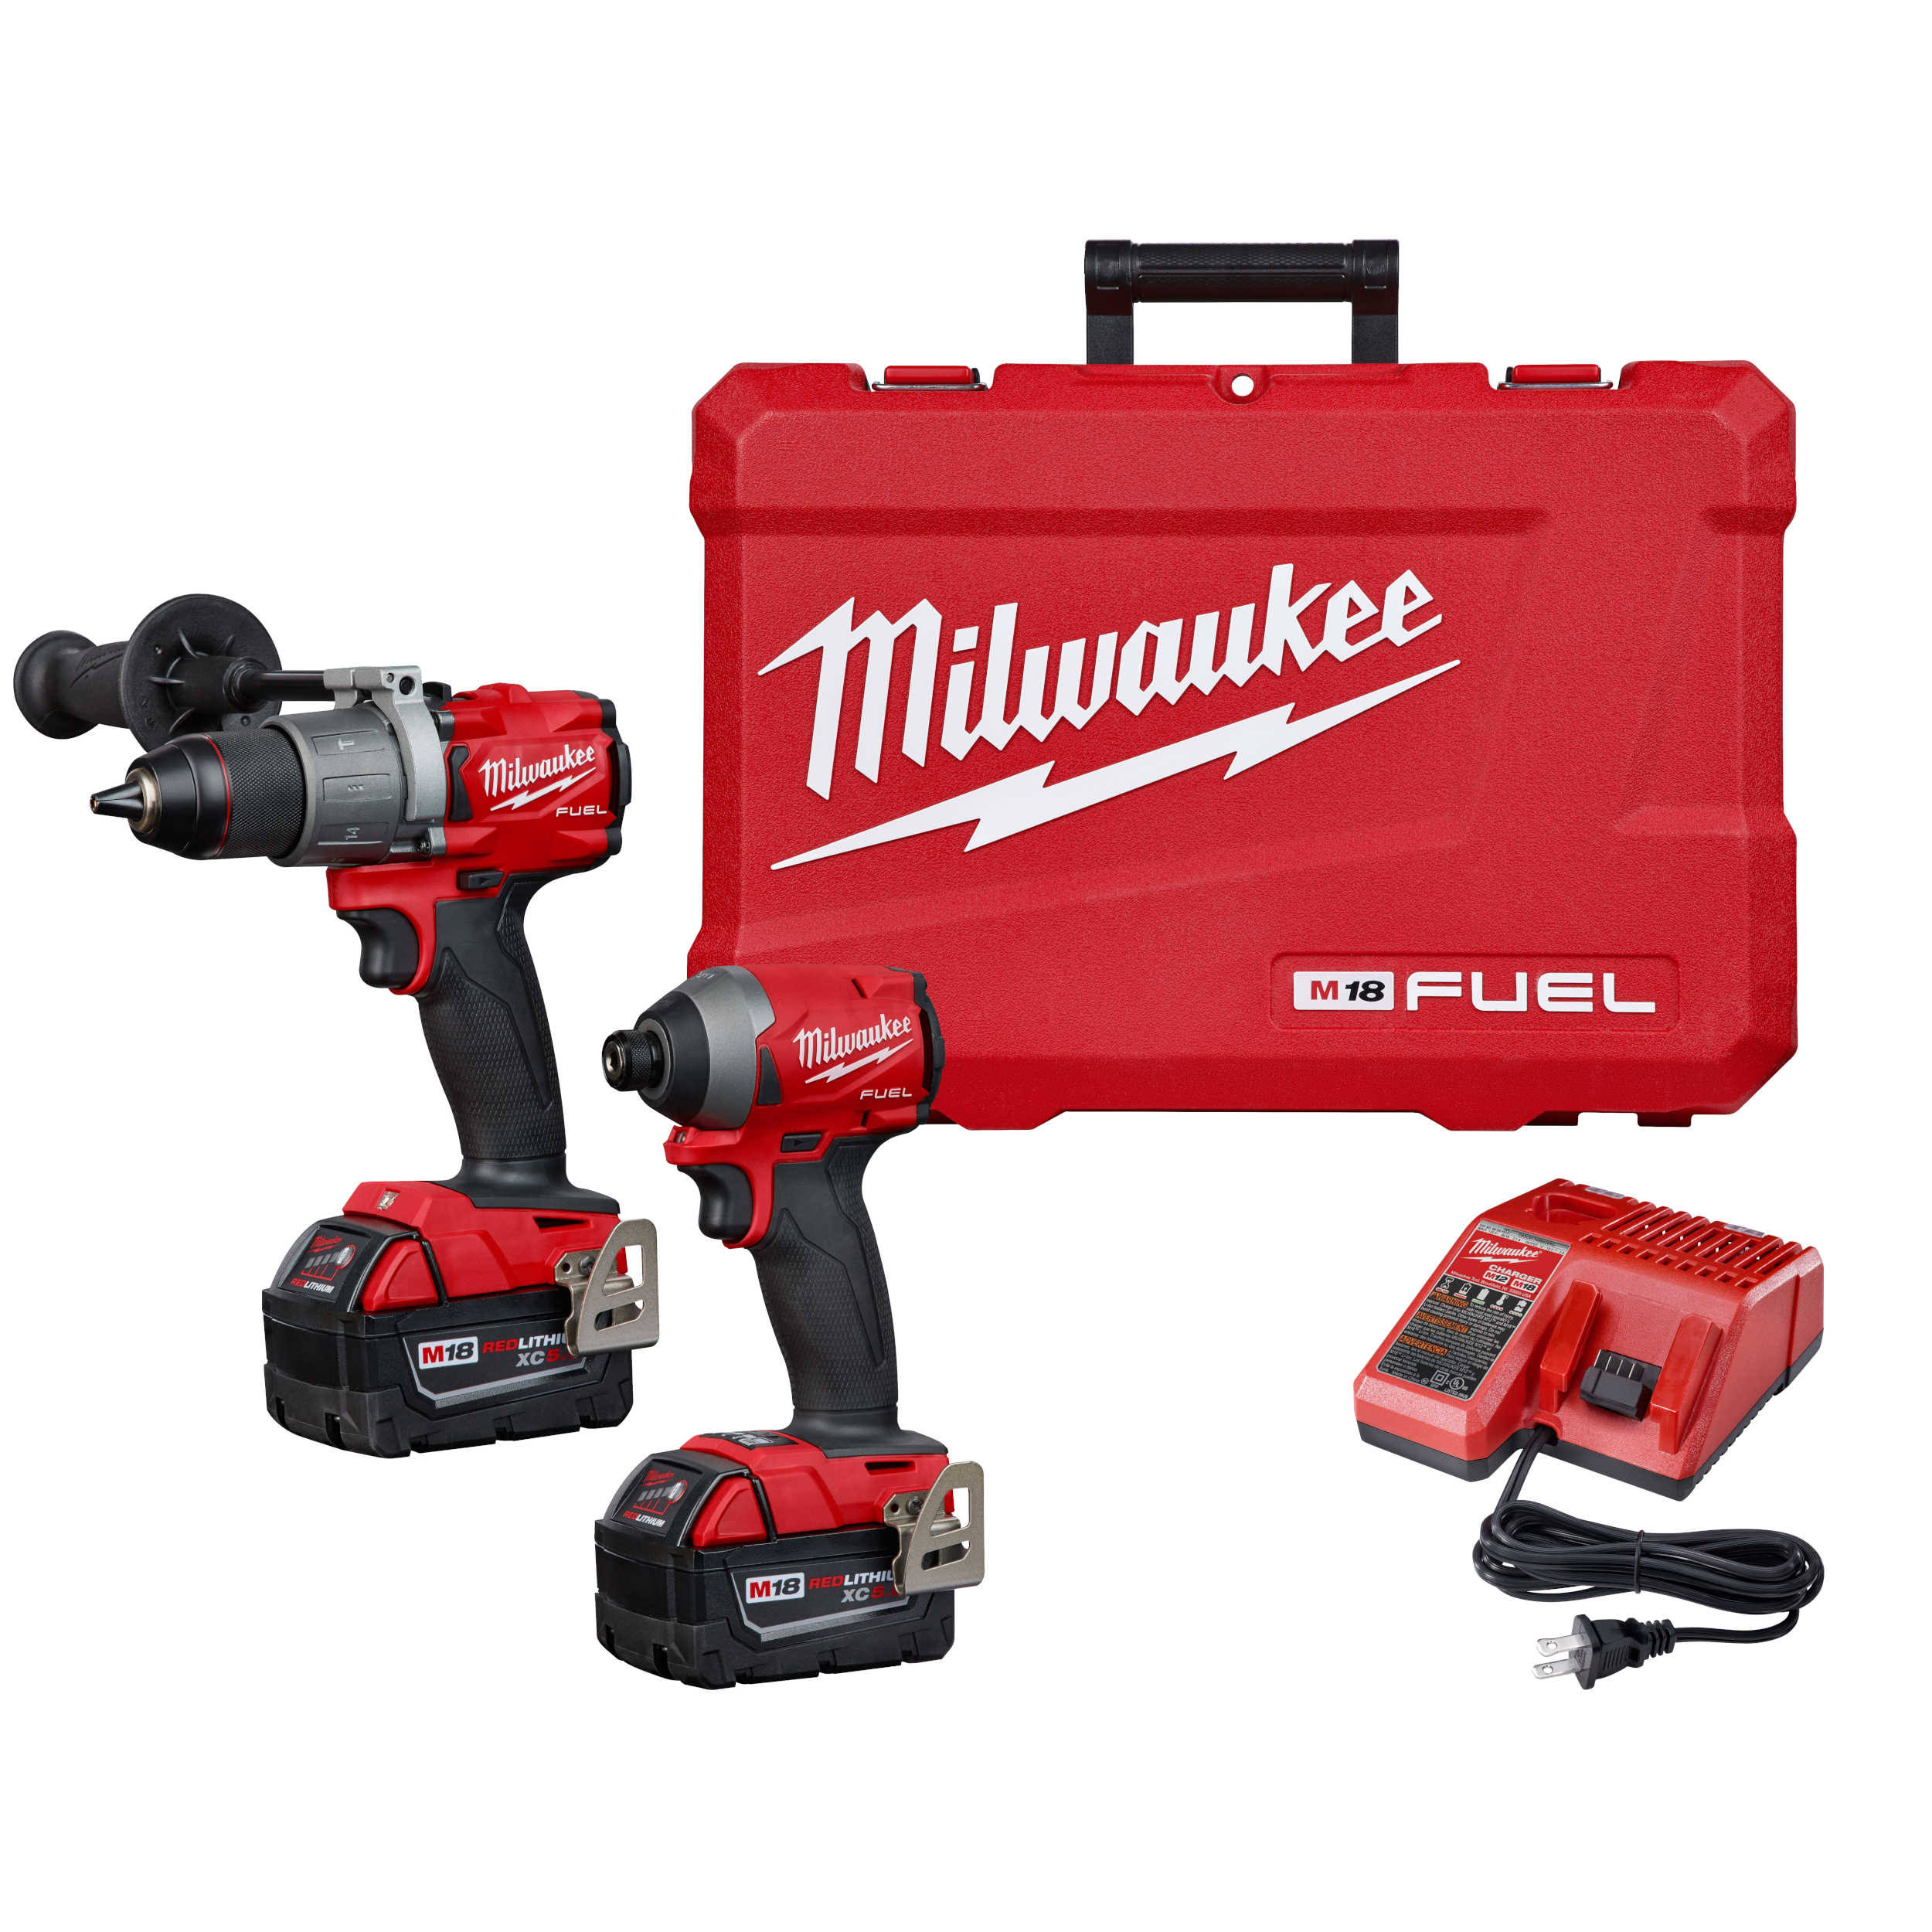 Milwaukee 2997-22 M18 Fuel 2-Tool Hammer Drill/Impact Driver Combo Kit